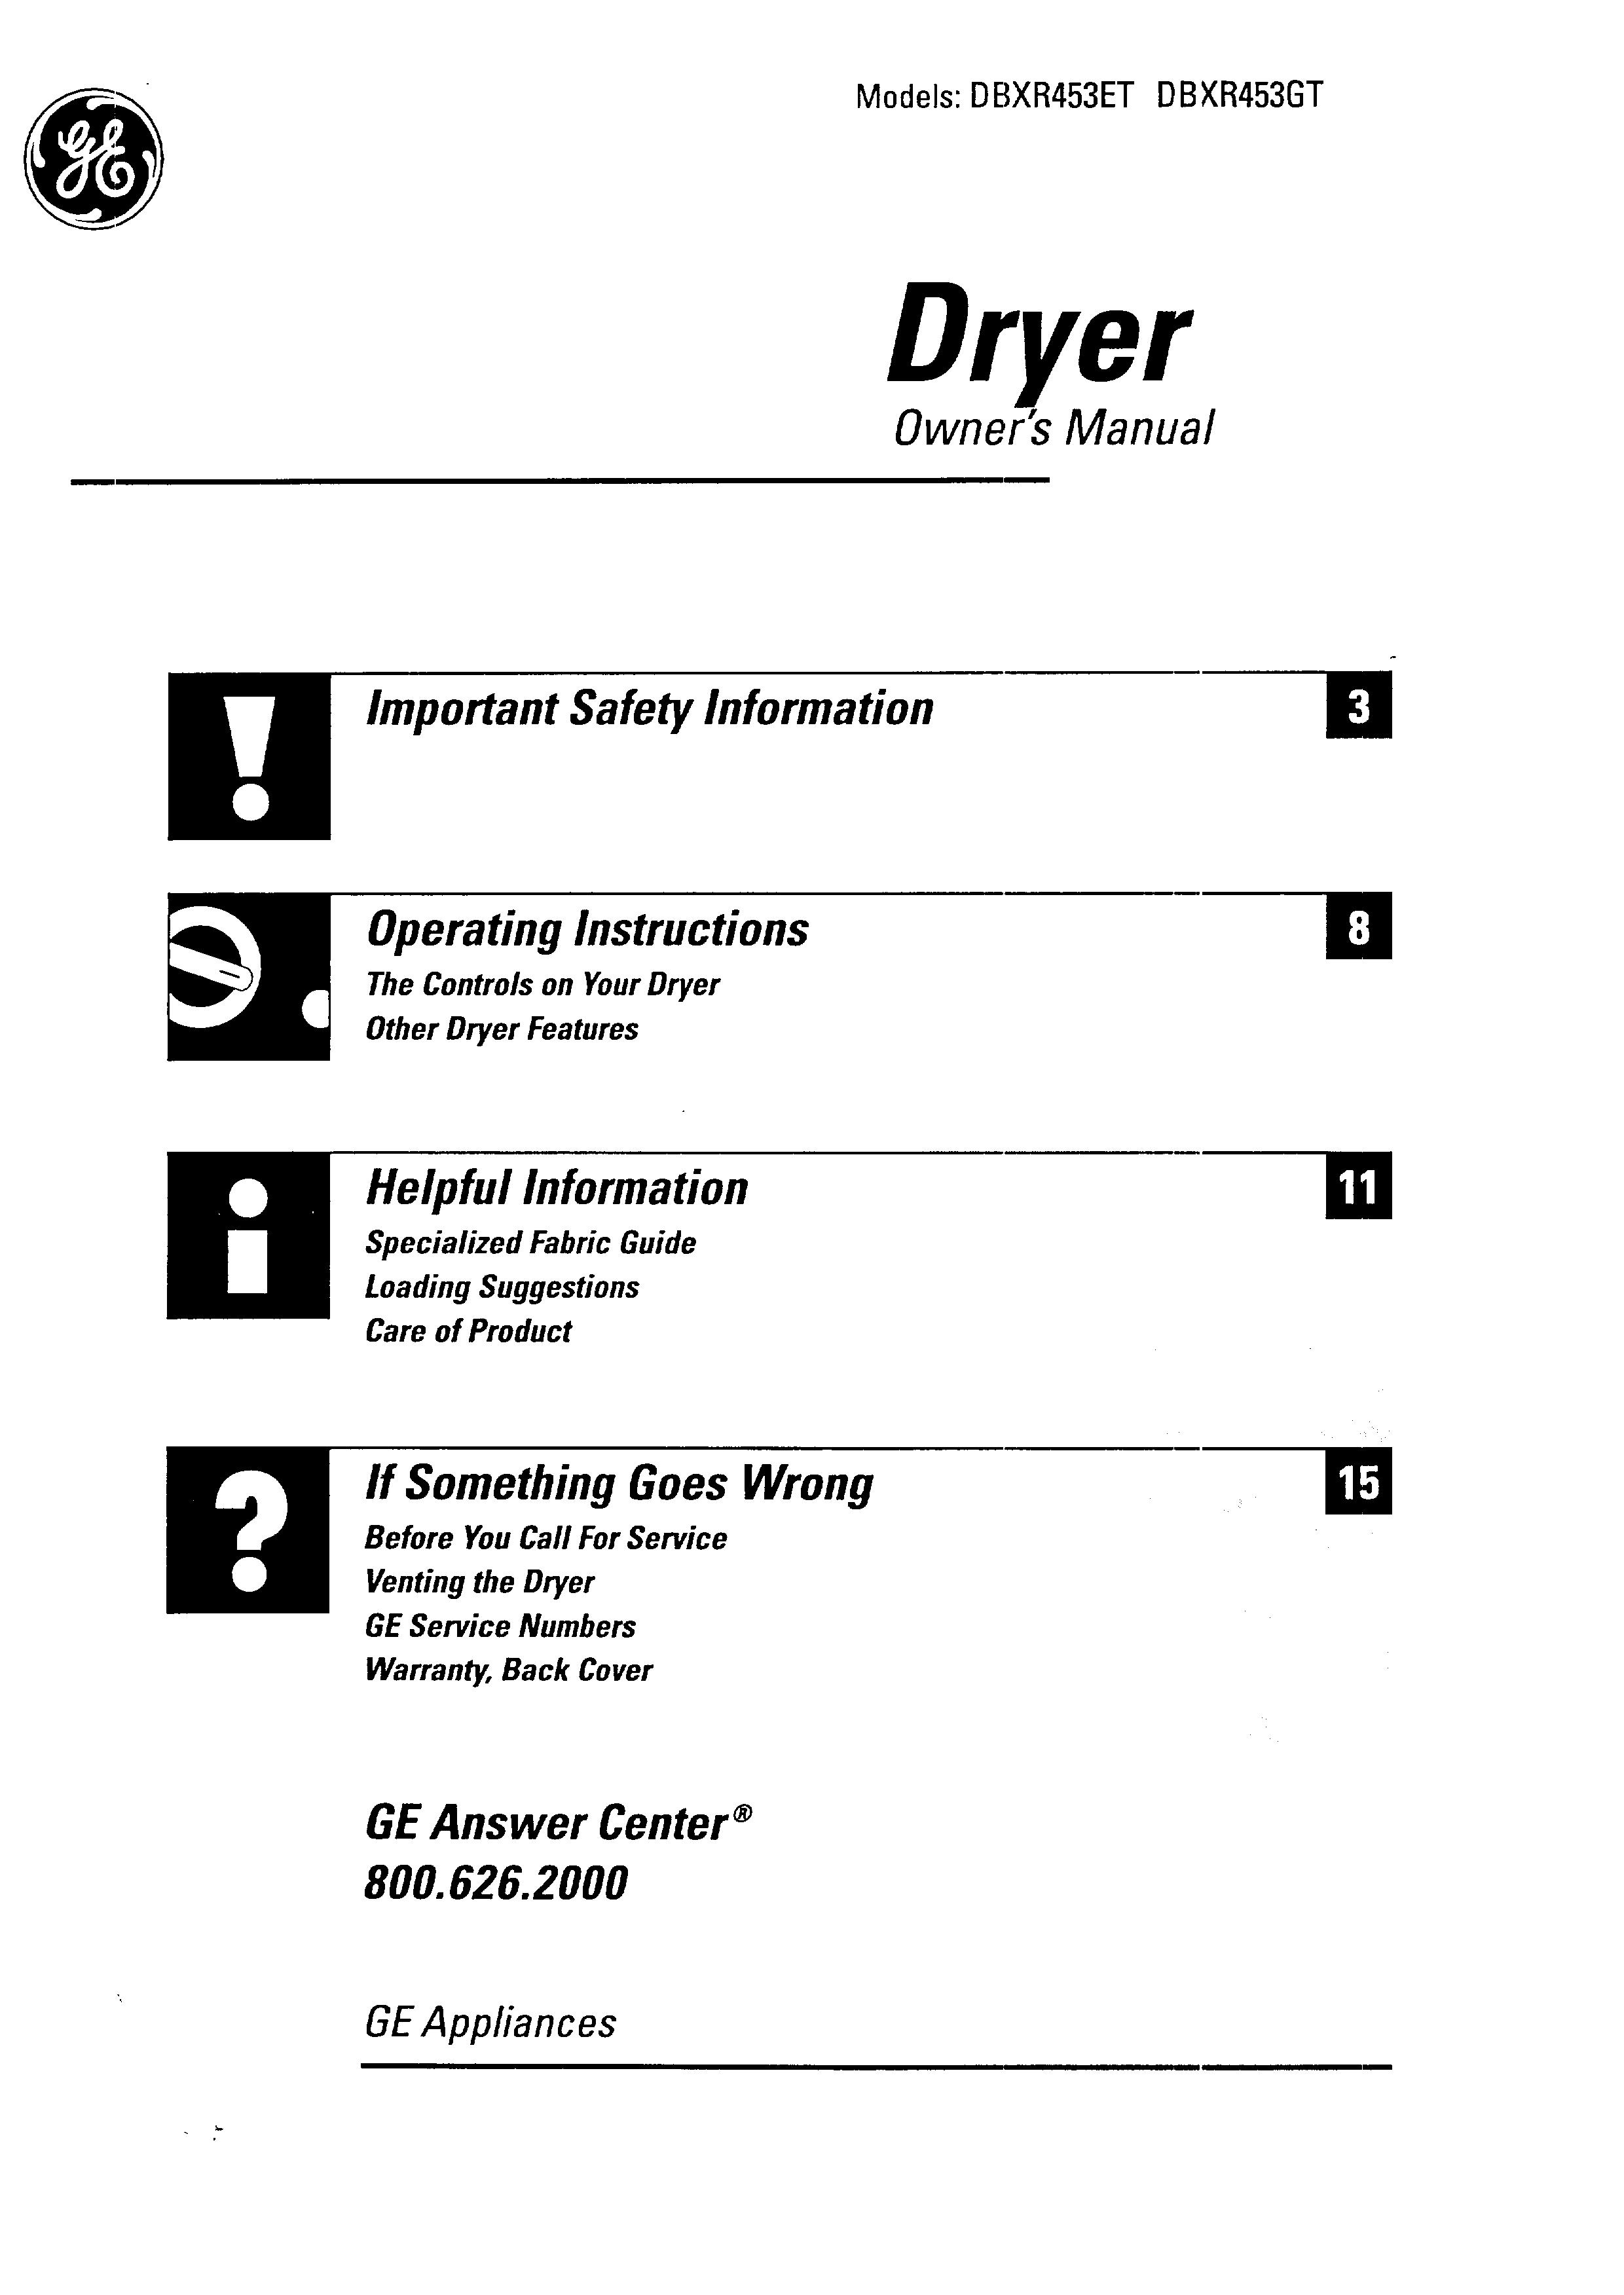 GE DBXR453GT Washer/Dryer User Manual